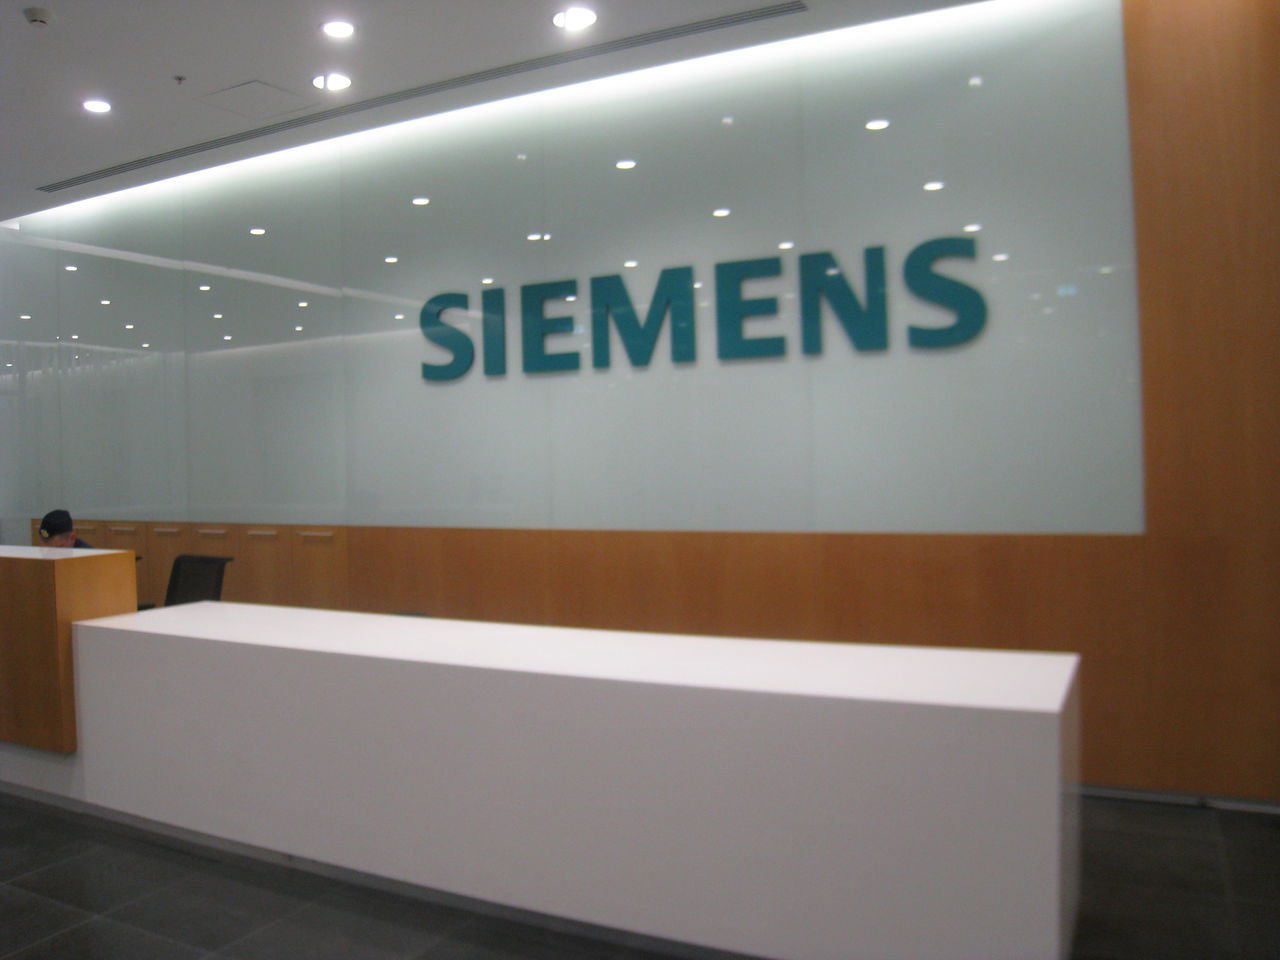 Siemens service. Сименс офис. Офис Siemens AG. Московский офис Сименс. Сименс штаб квартира.